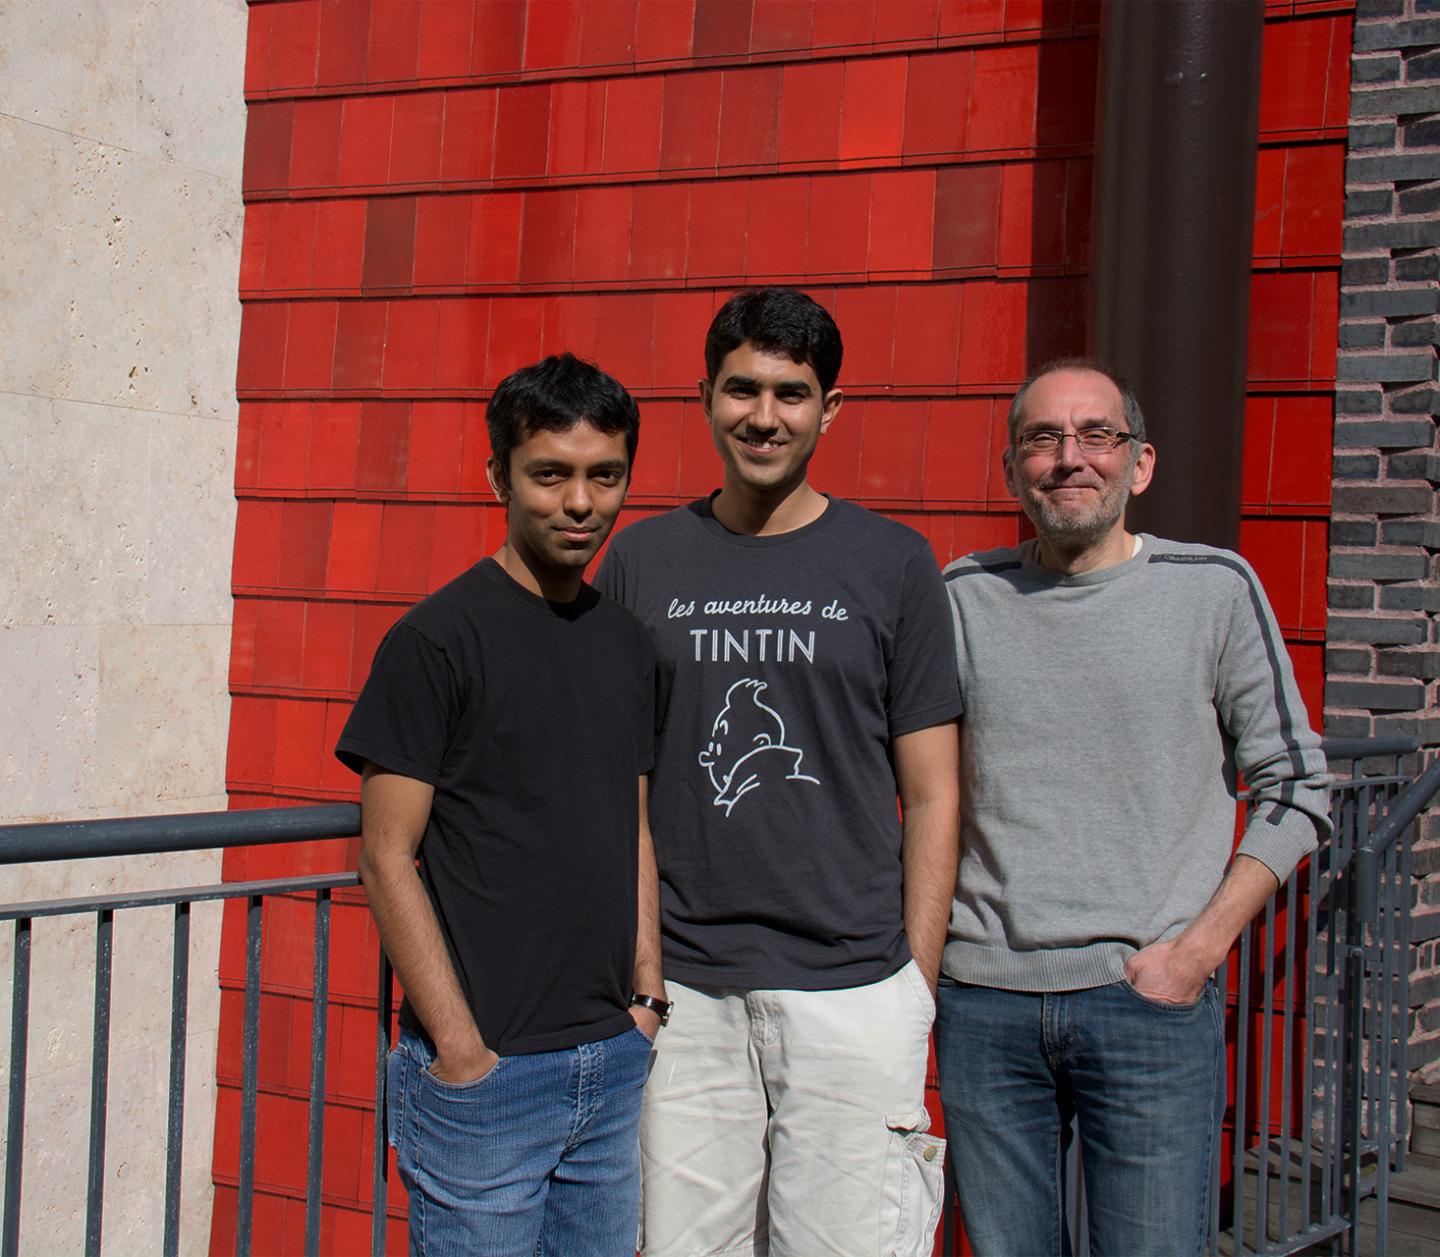 Researchers from OIST's Fluid Mechanics Unit and Continuum Physics Unit